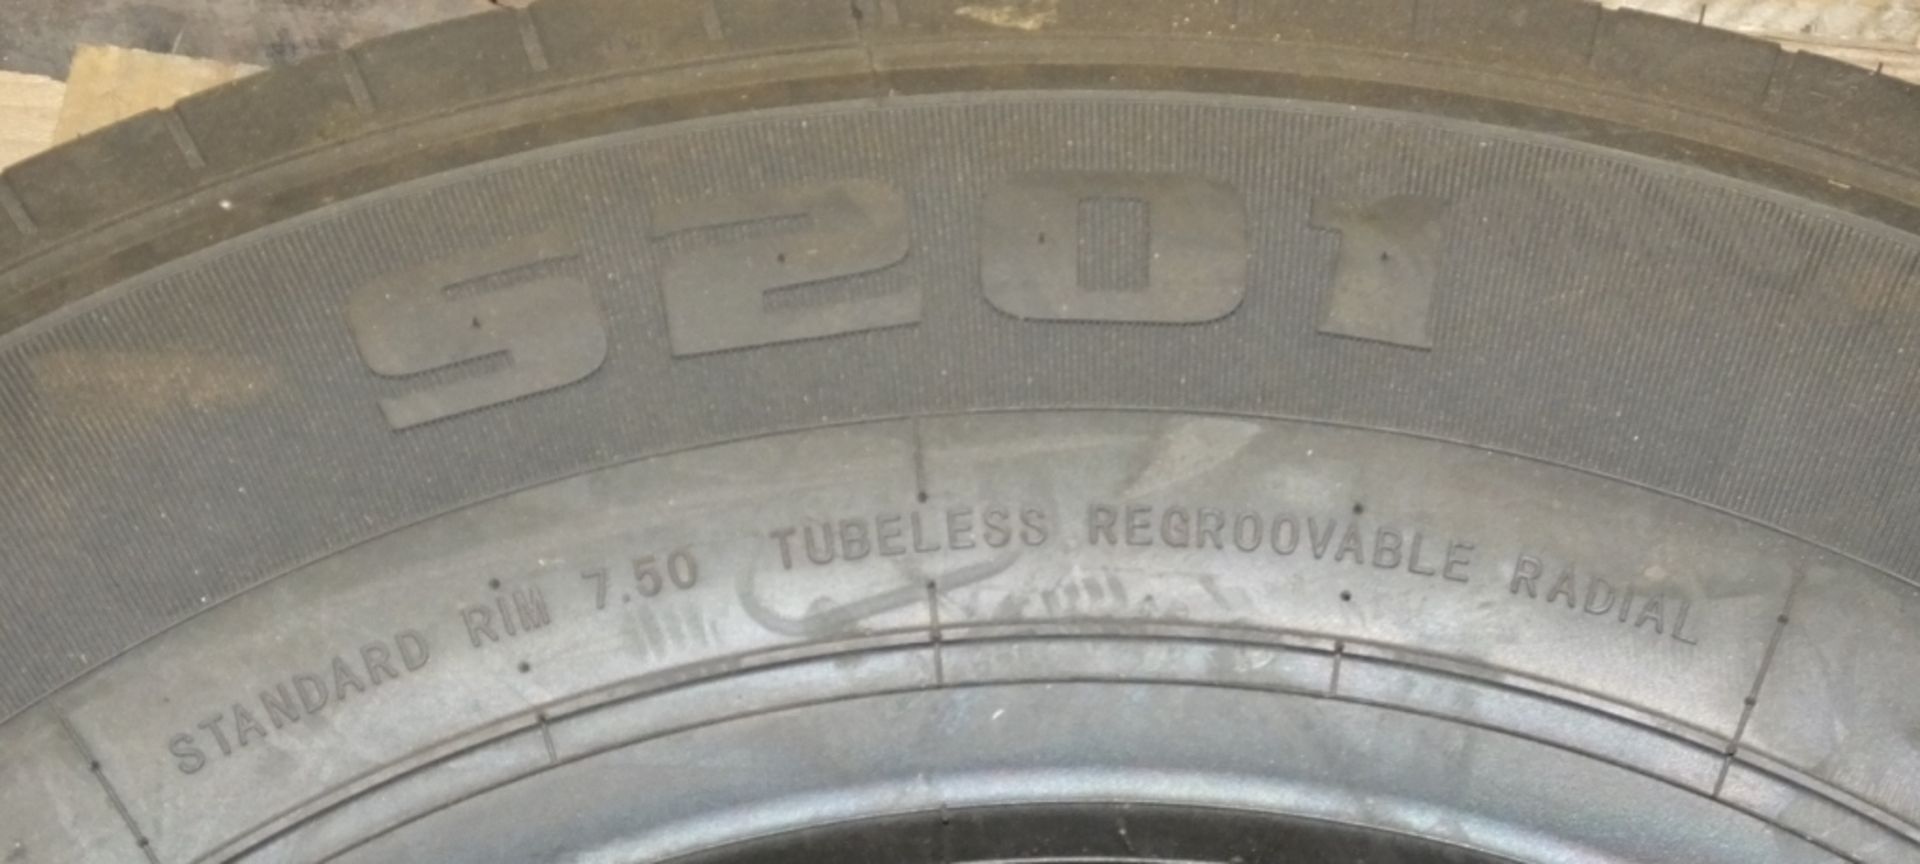 Alplus 265 / 70R 19.5 S201 tyre (new & unused) - Image 3 of 5